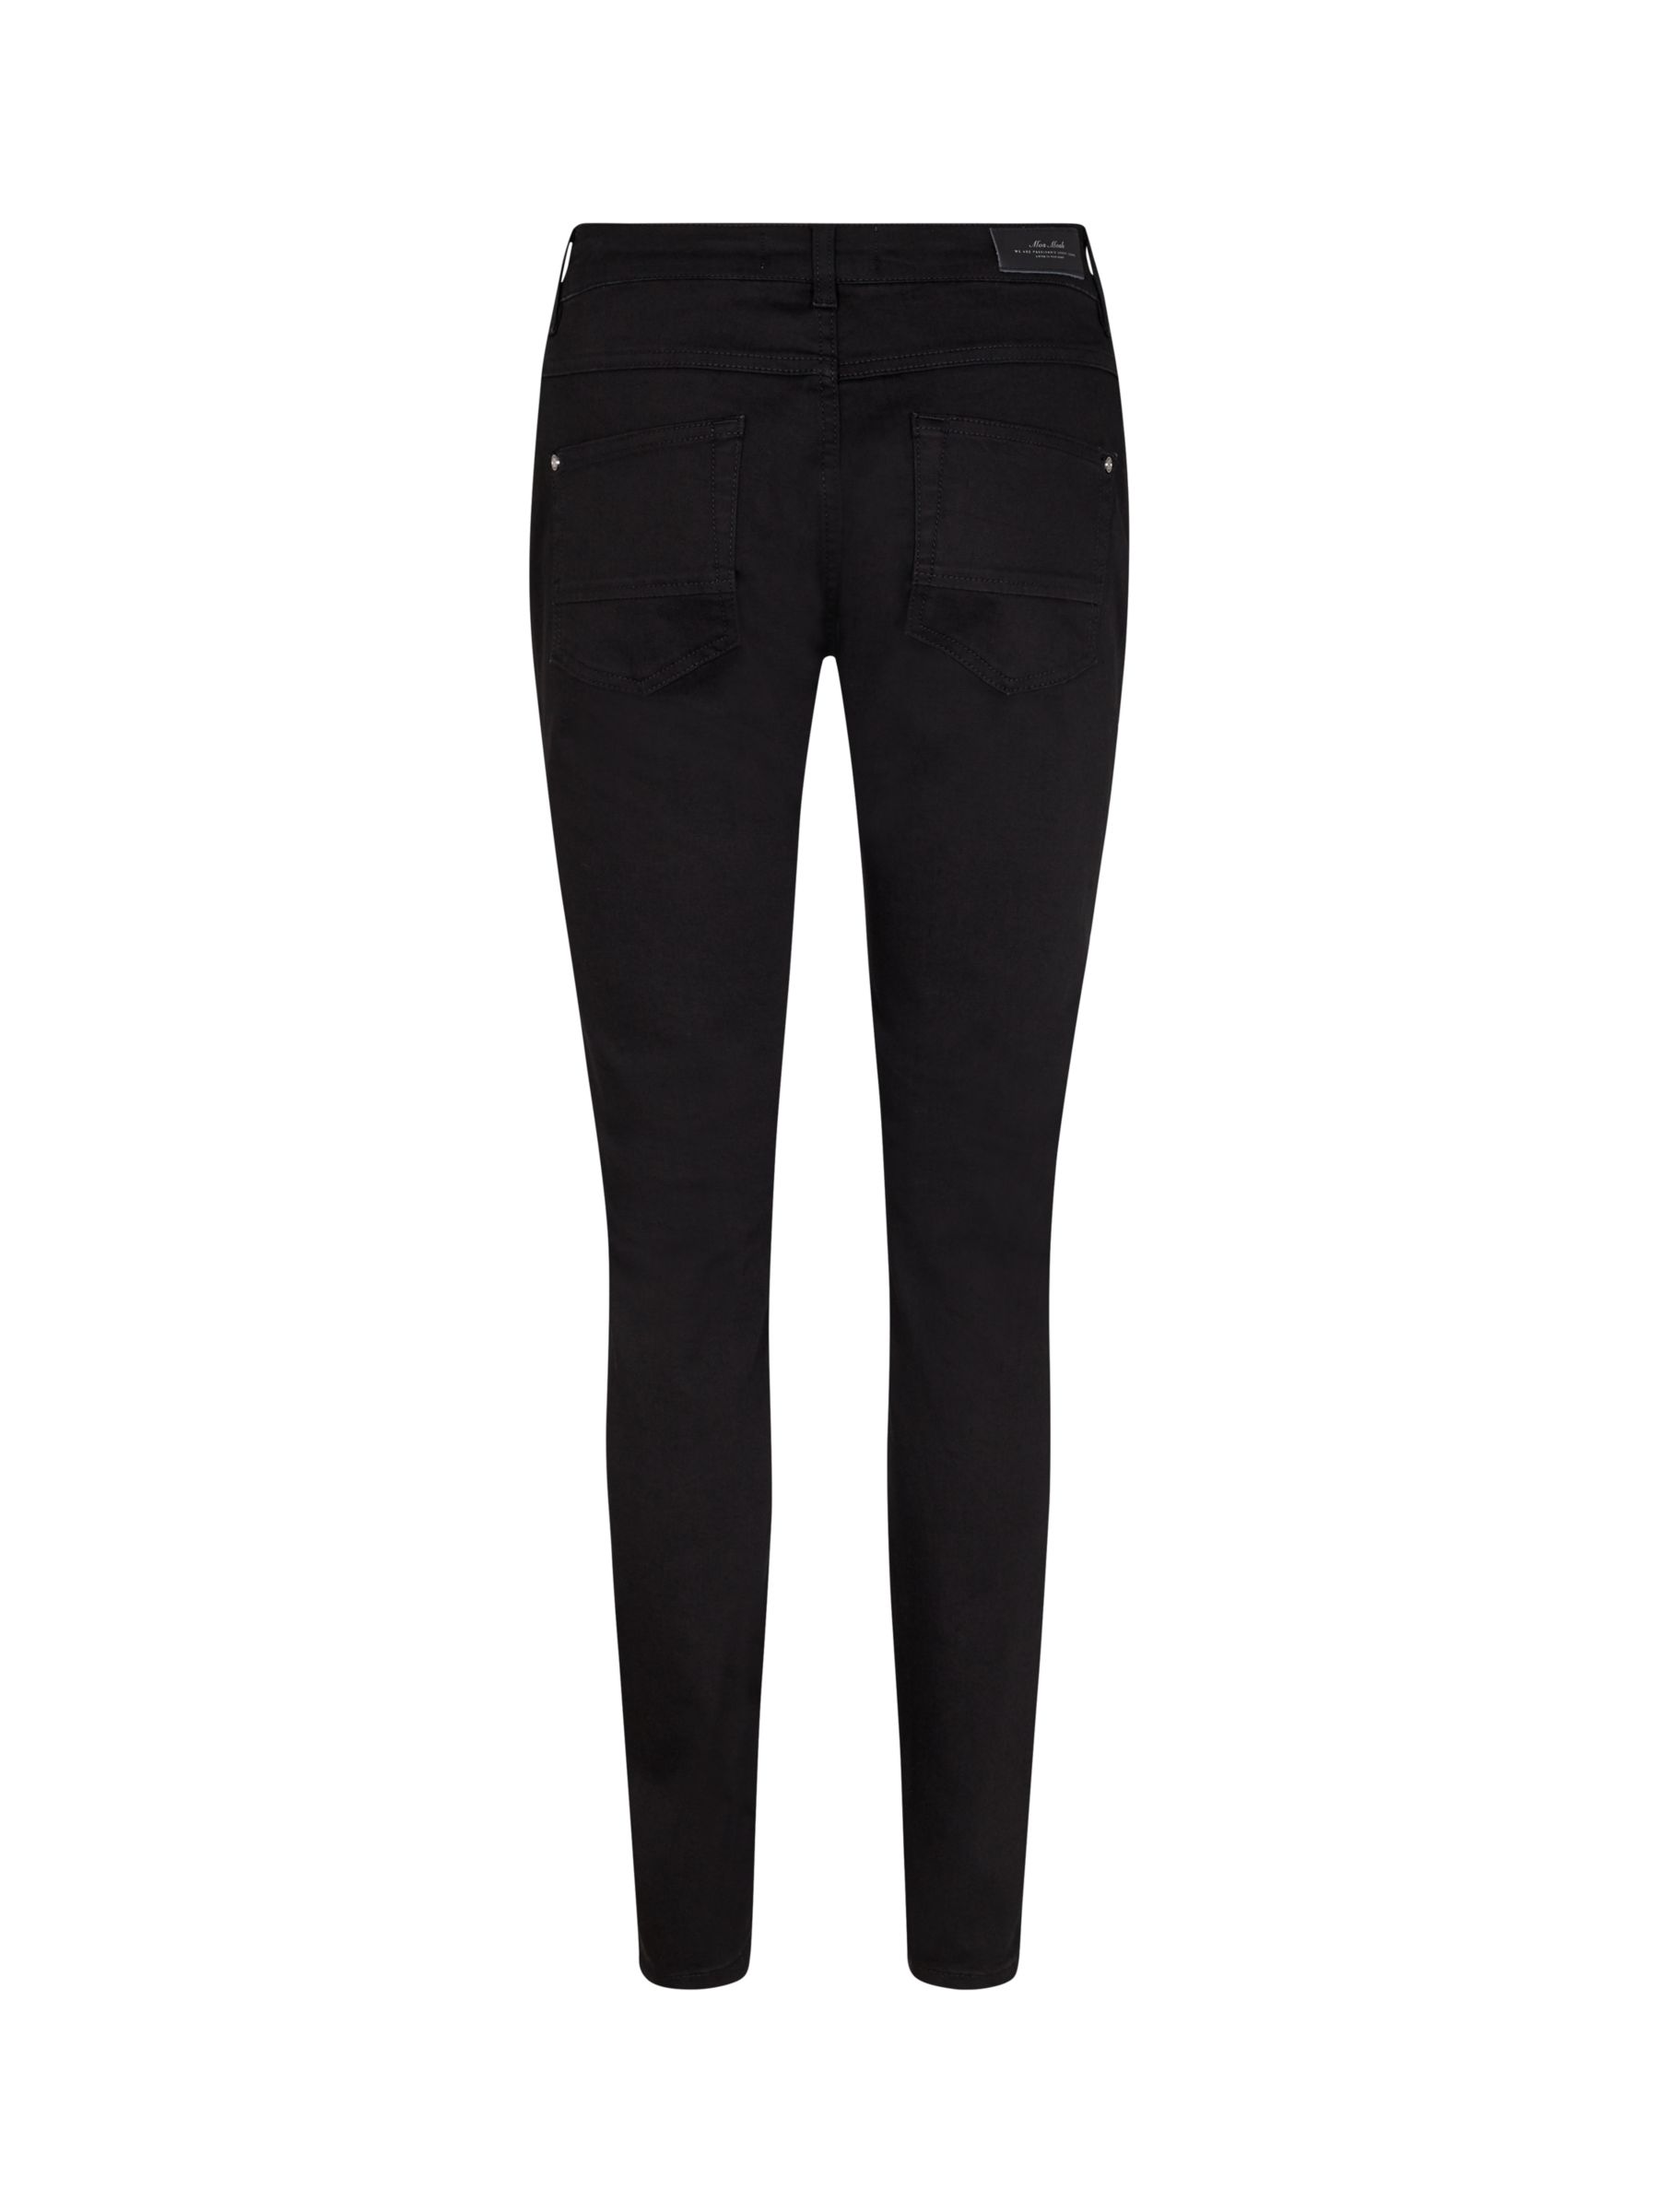 MOS MOSH Naomi Cover Jeans, Black, 26R